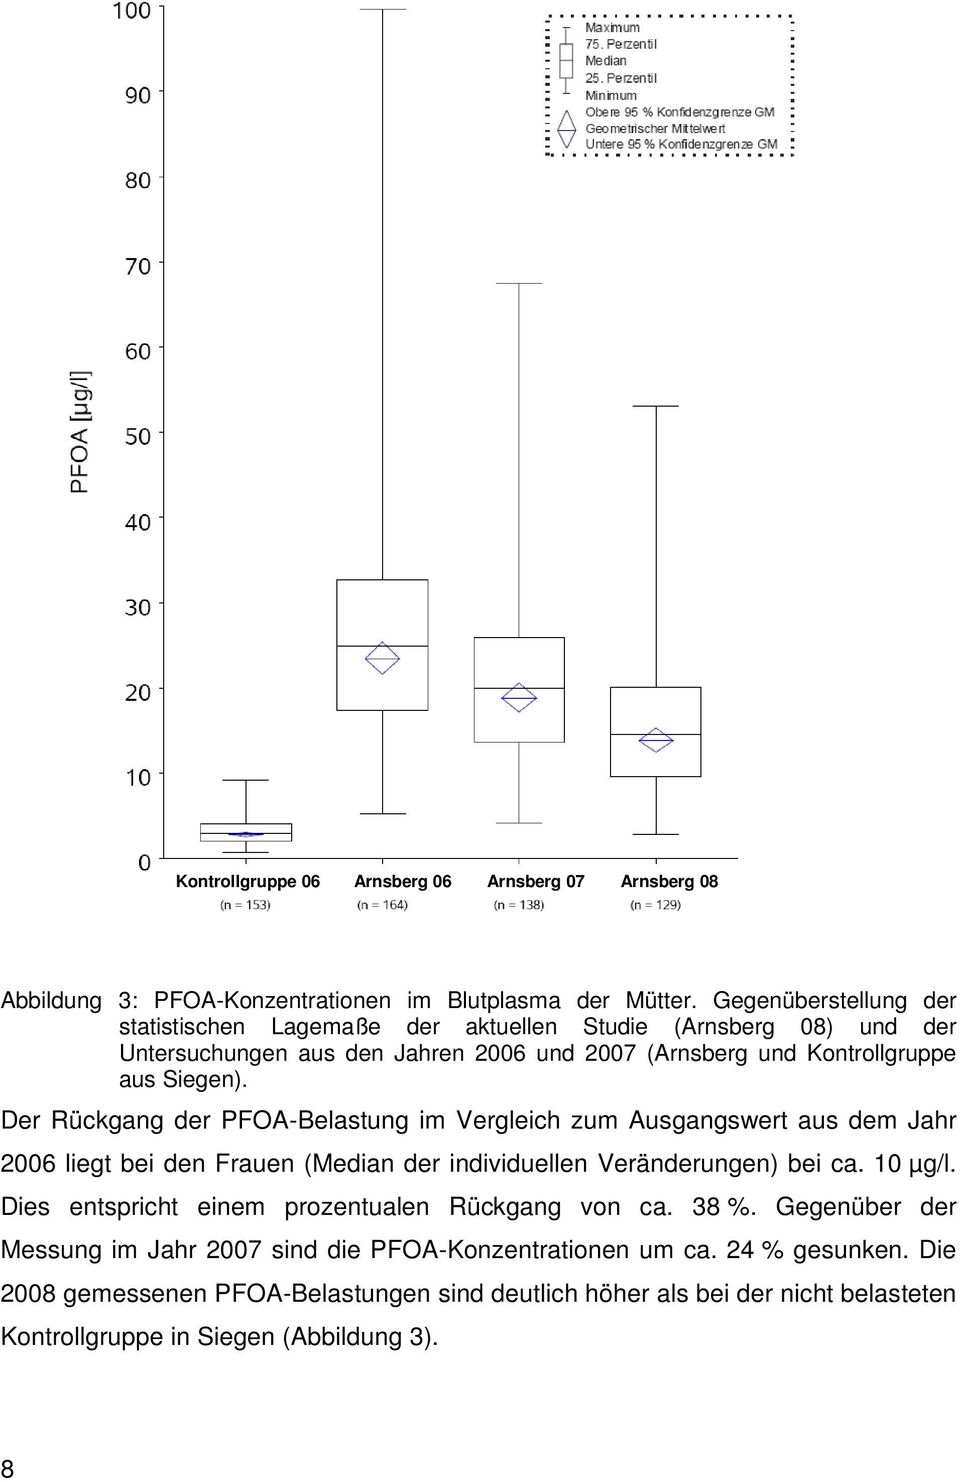 Der Rückgang der PFOA-Belastung im Vergleich zum Ausgangswert aus dem Jahr 2006 liegt bei den Frauen (Median der individuellen Veränderungen) bei ca. 10 µg/l.